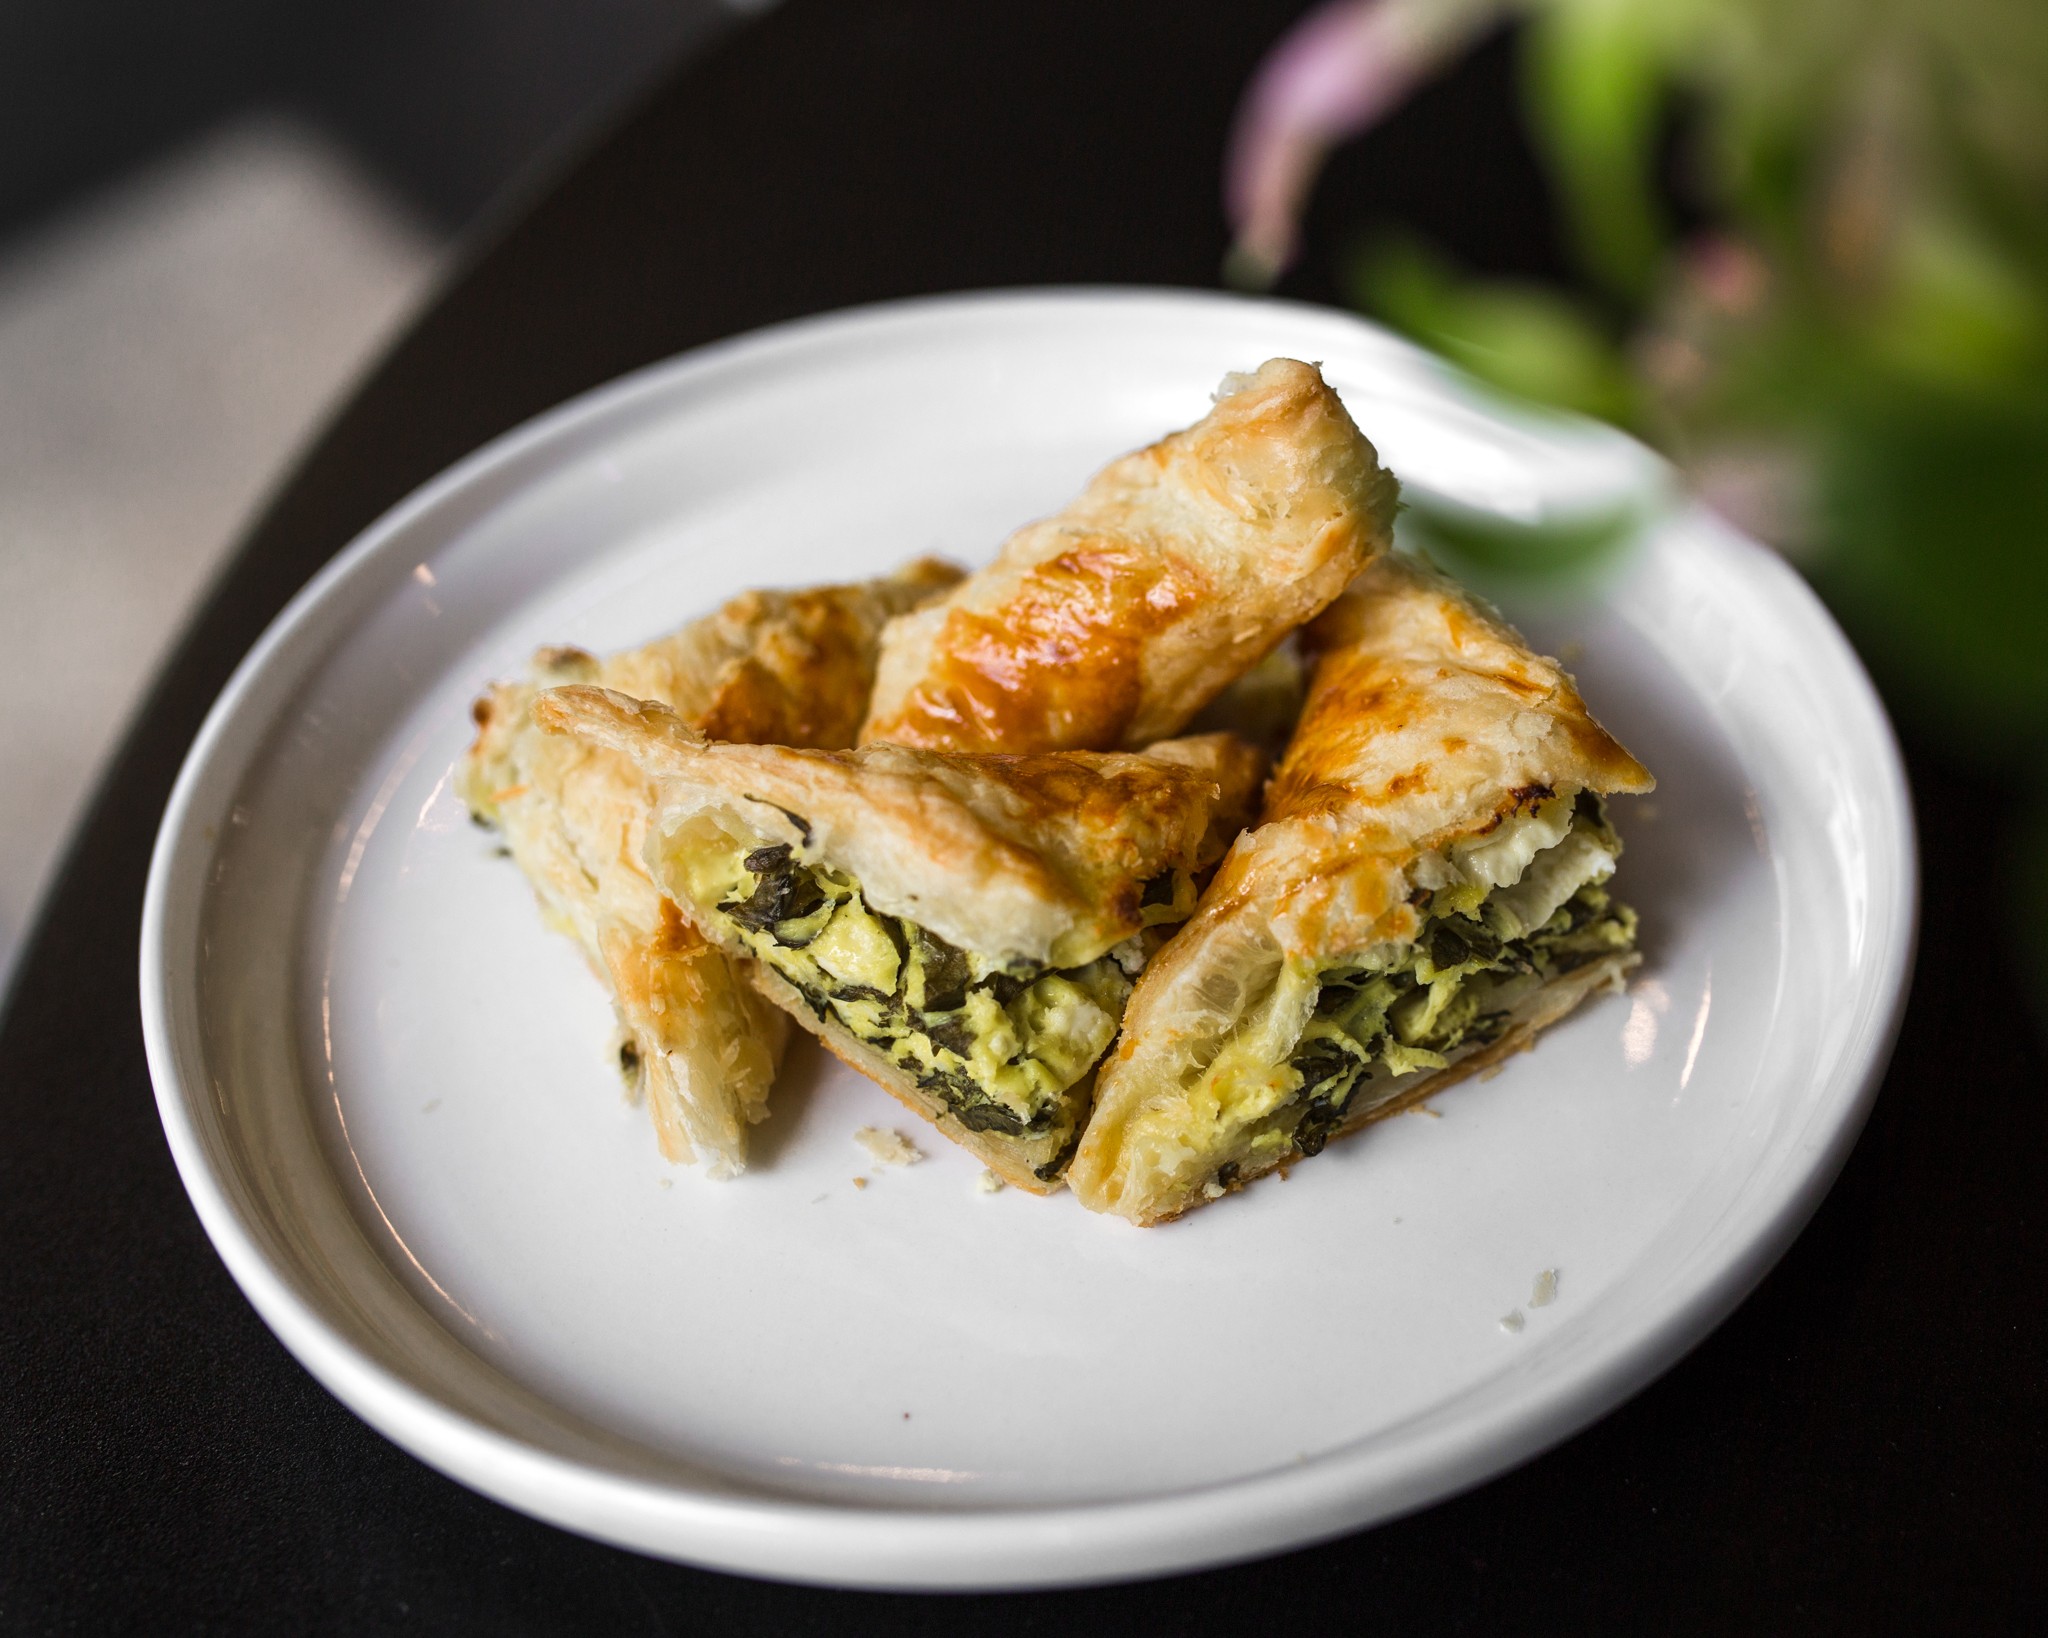 Spinach/Feta/Egg Breakfast Pastry